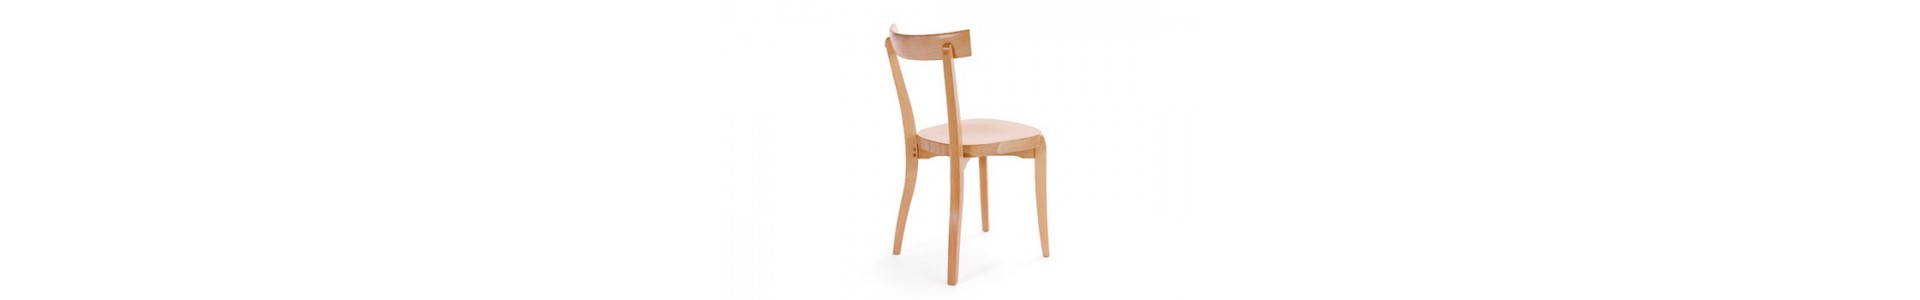 Sillas Casual Solutions. Catálogo sillas modernas Muebles Lluesma